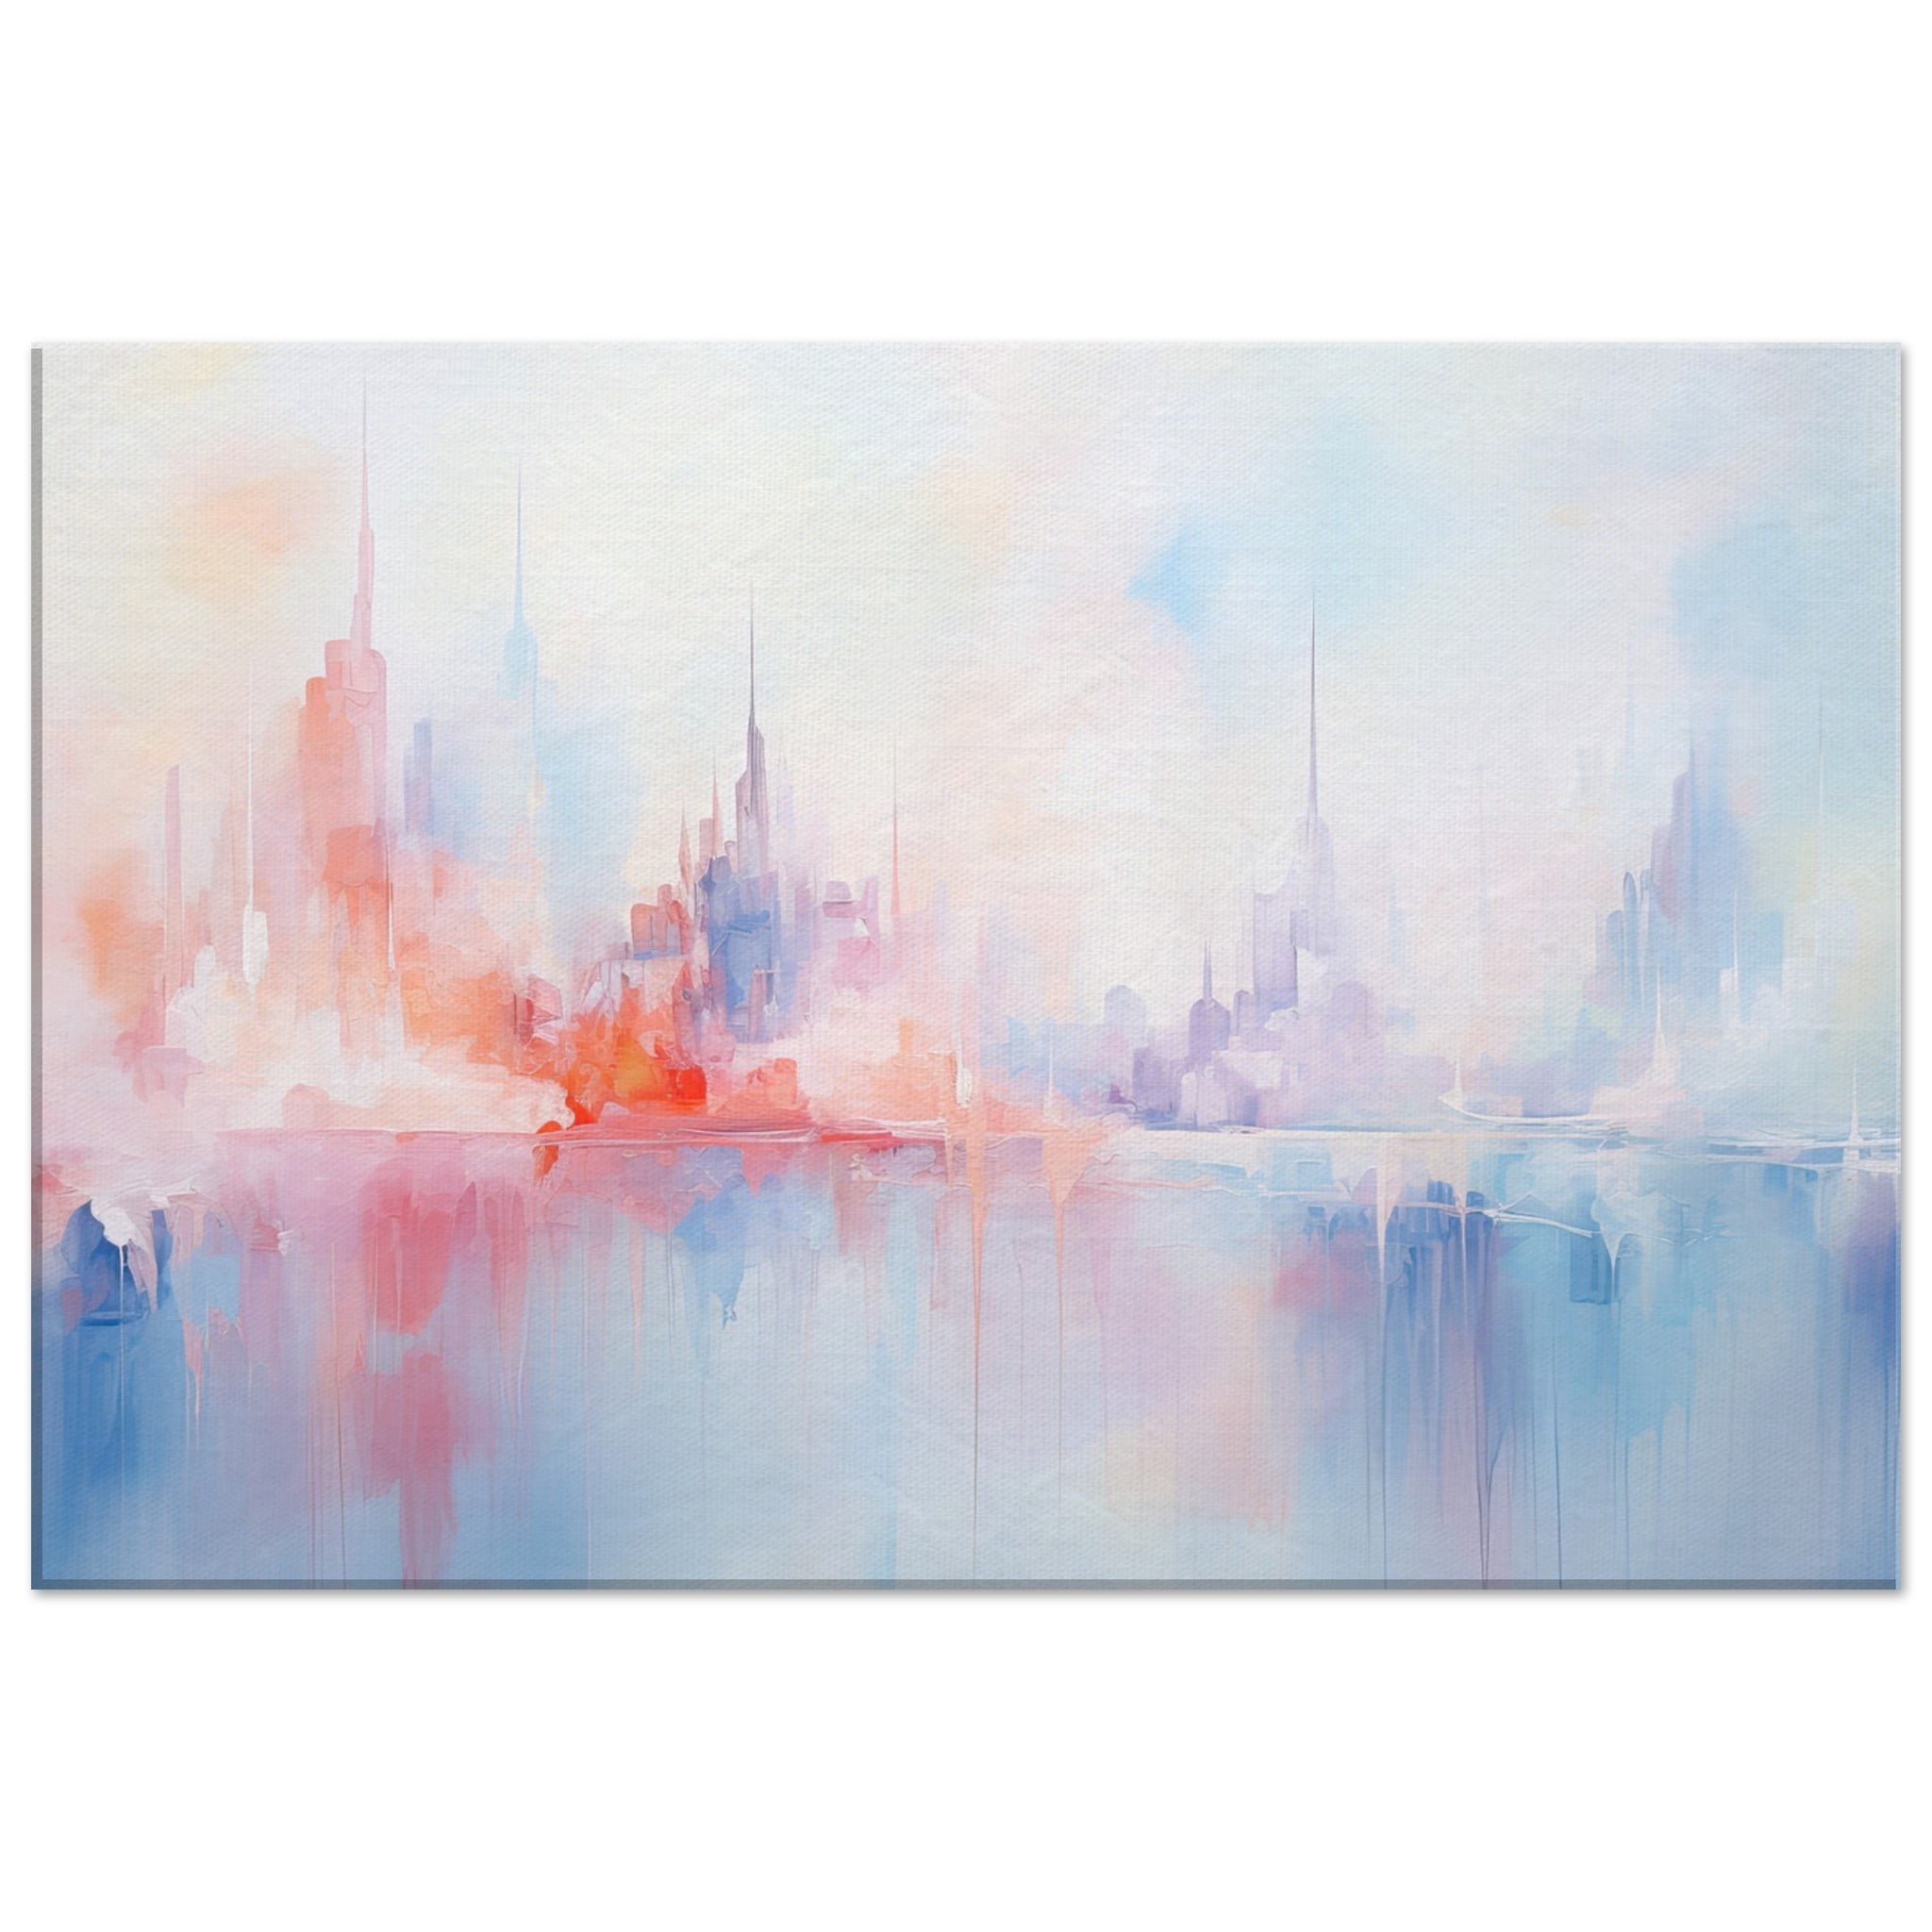 Pastel Abstract City Skyline Canvas Print – 40×60 cm / 16×24″, Slim